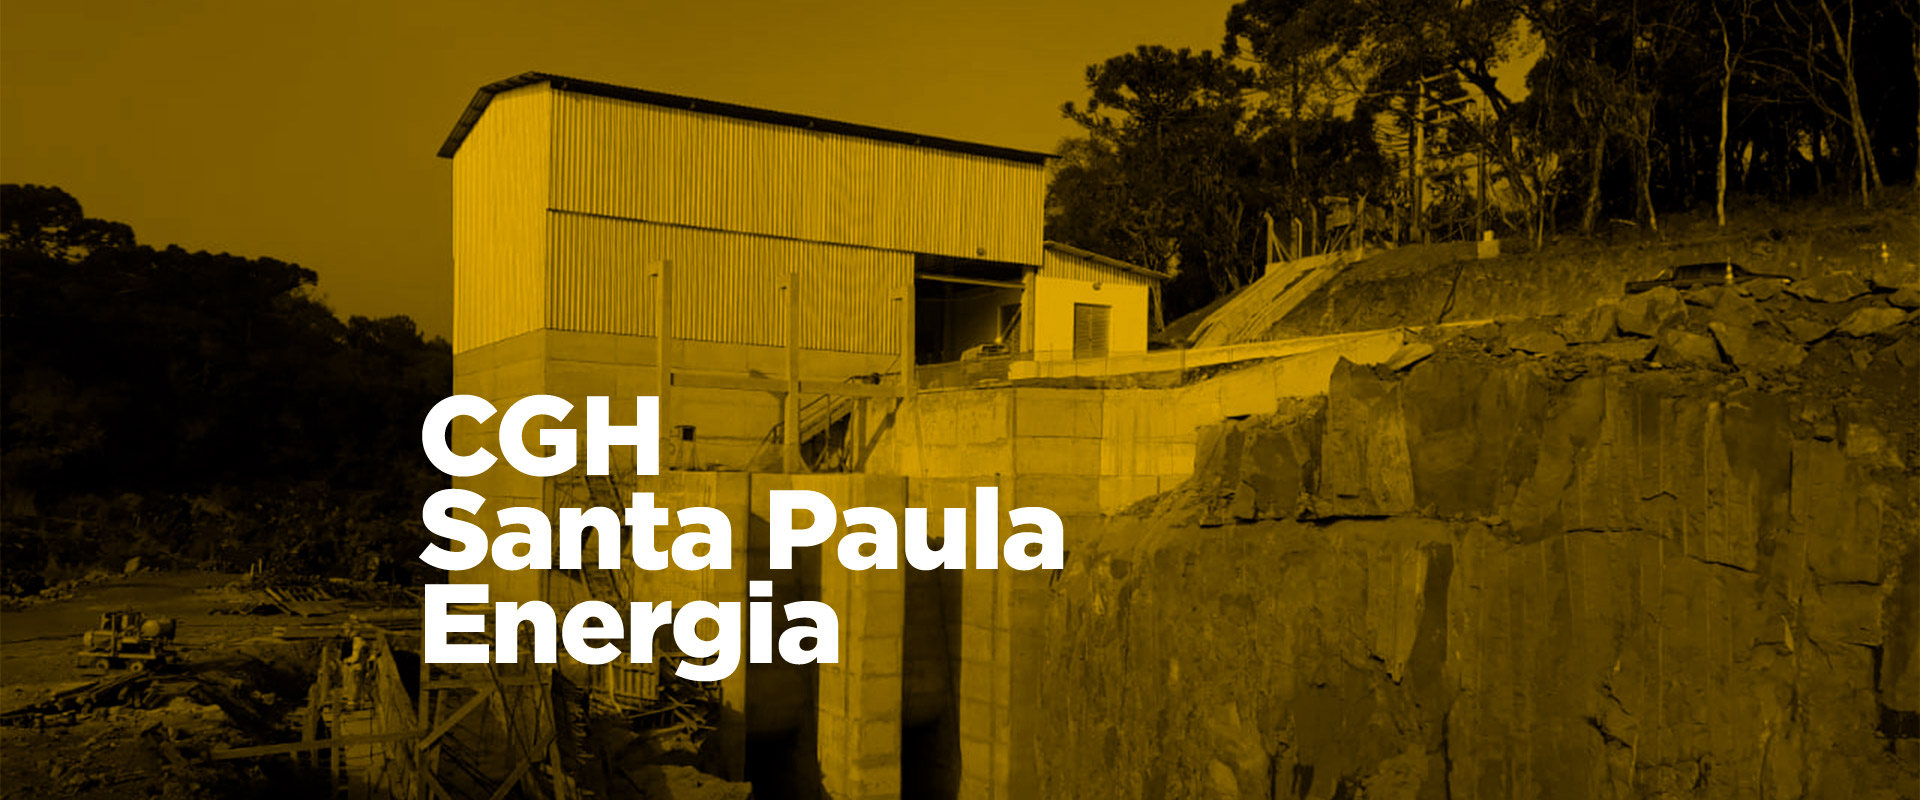 CGH Santa Paula Energia